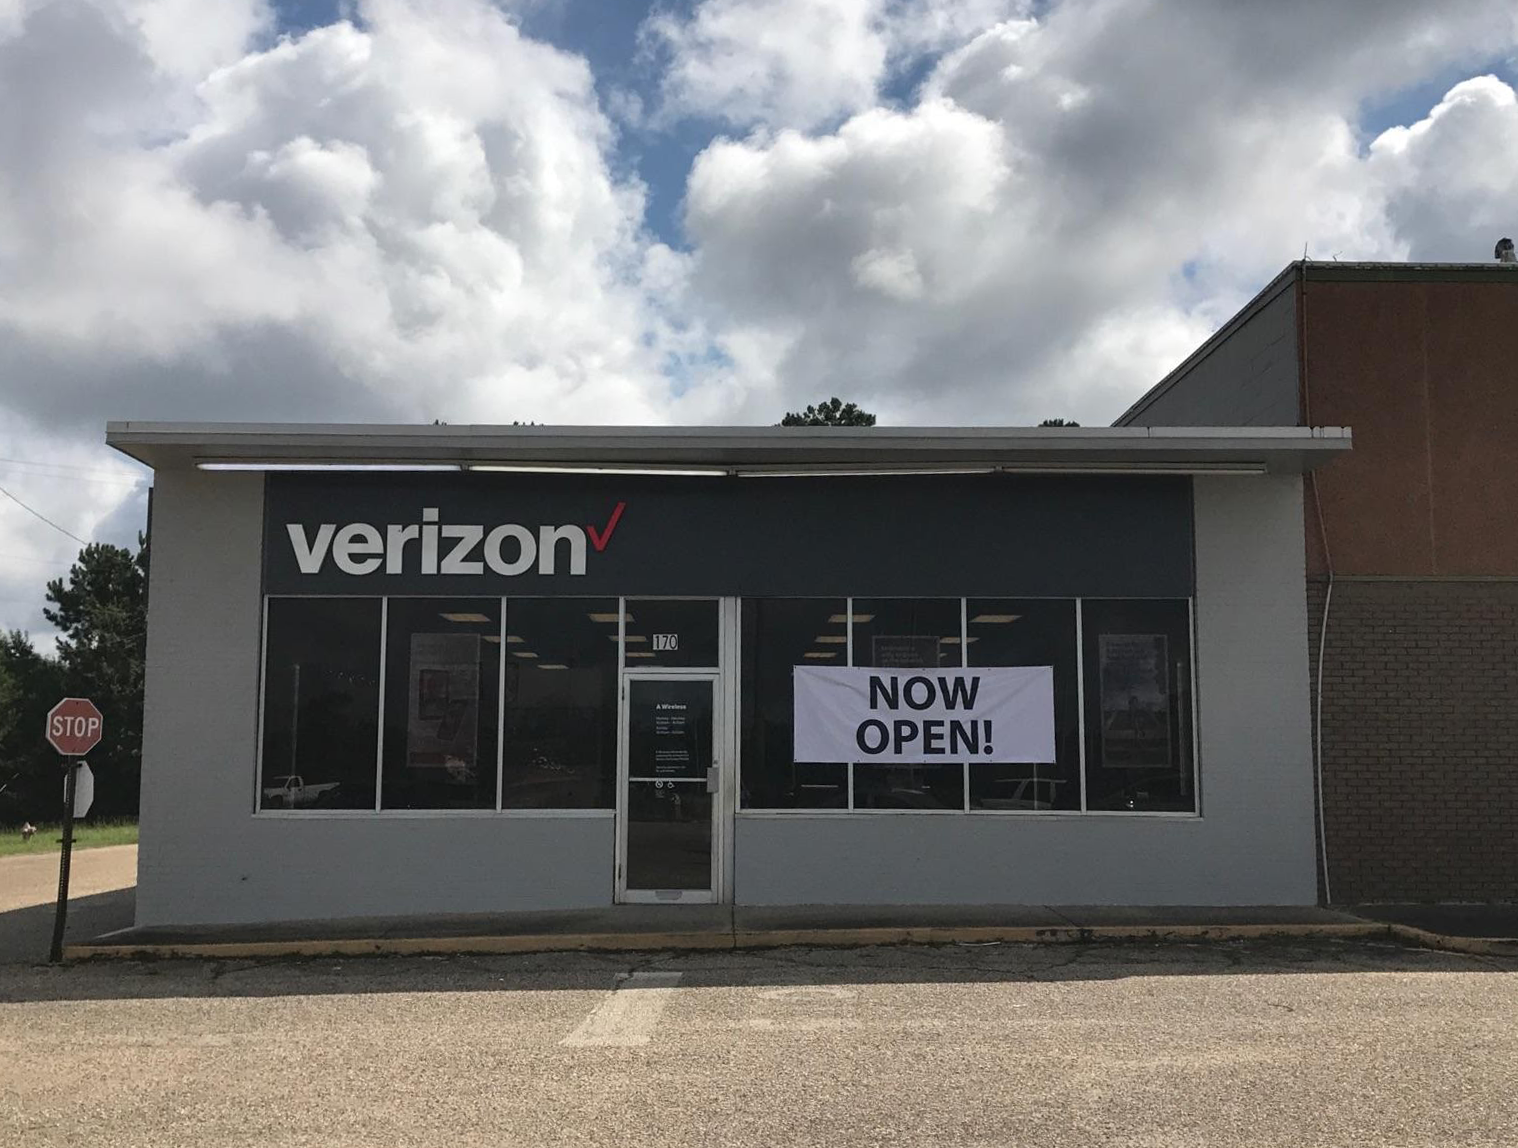 Verizon Authorized Retailer – Victra Photo